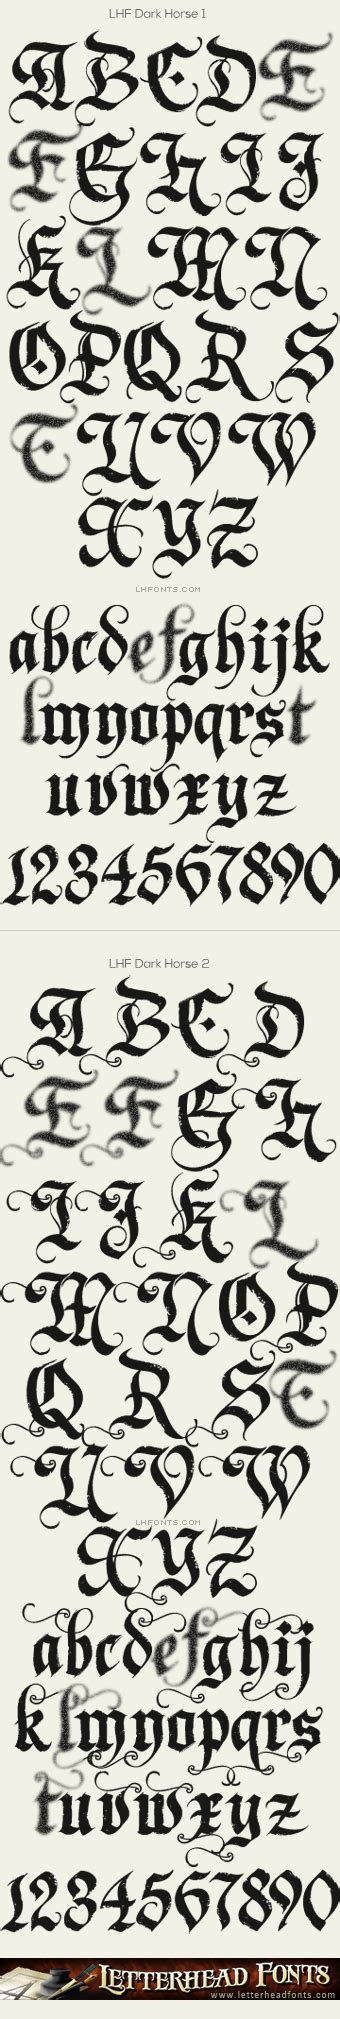 Letterhead Fonts Lhf Dark Horse Font Set Gothic Fonts Gothic